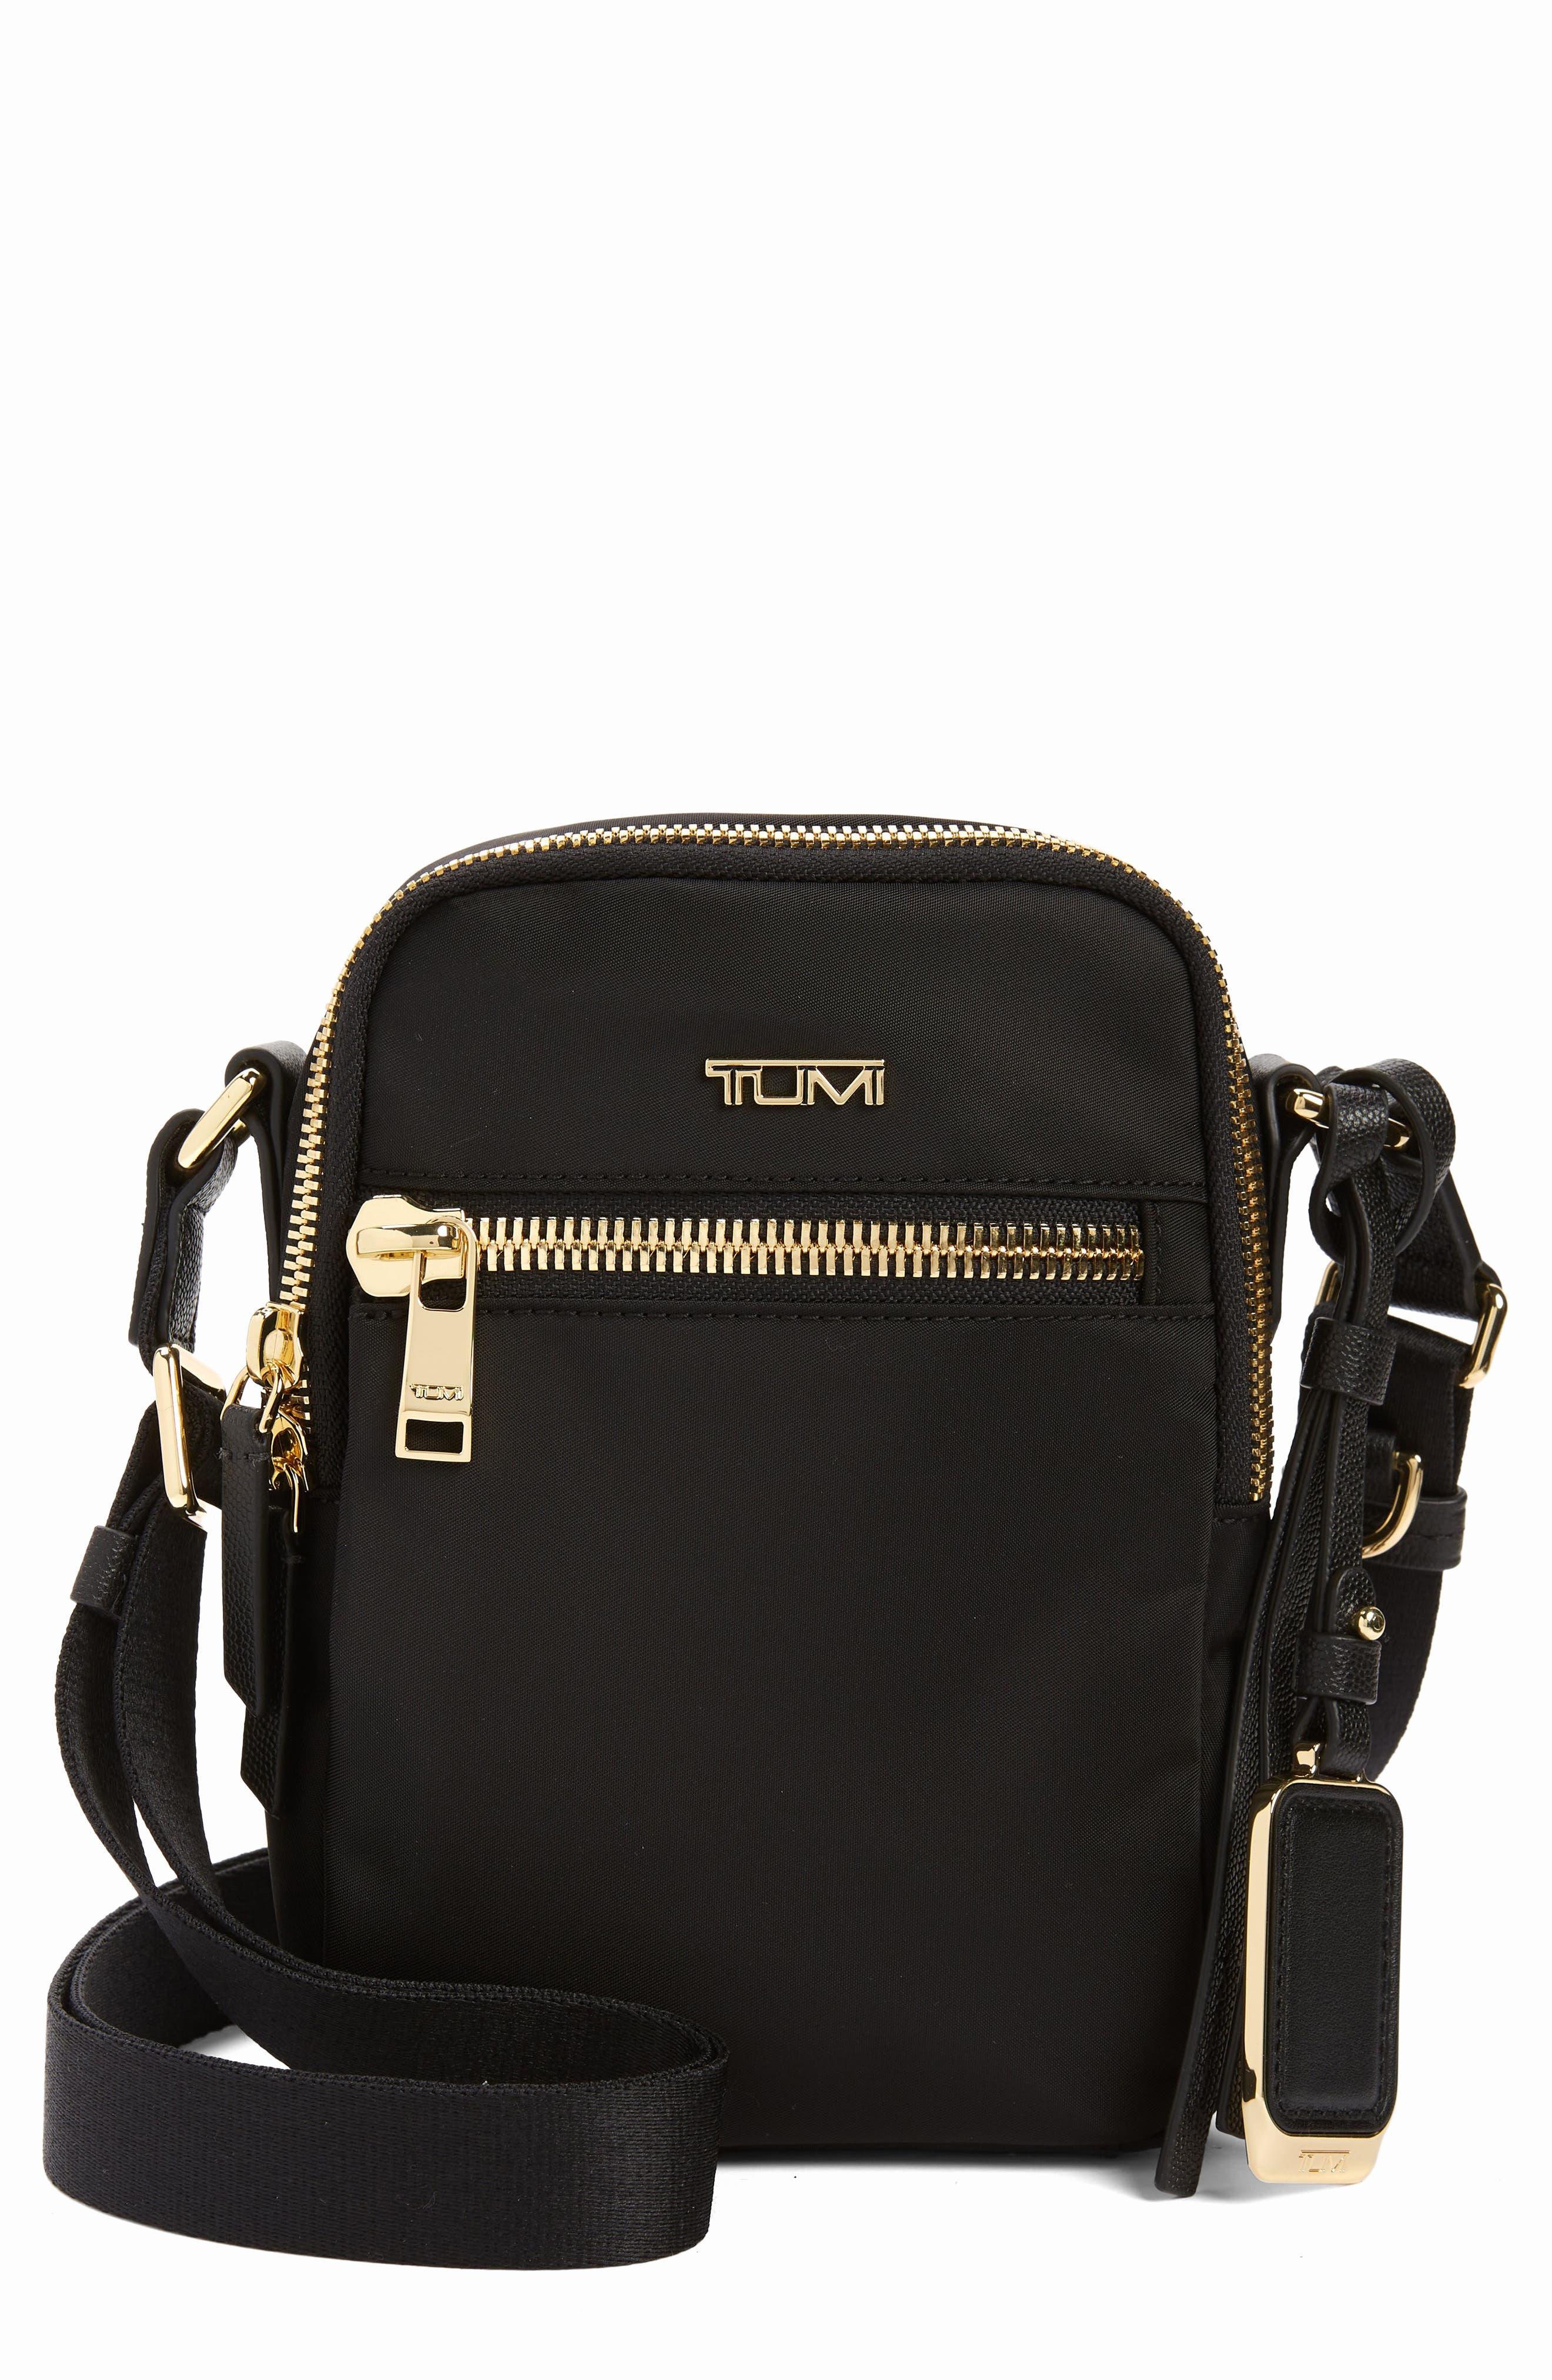 Tumi Persia Crossbody Bag in Black | Lyst